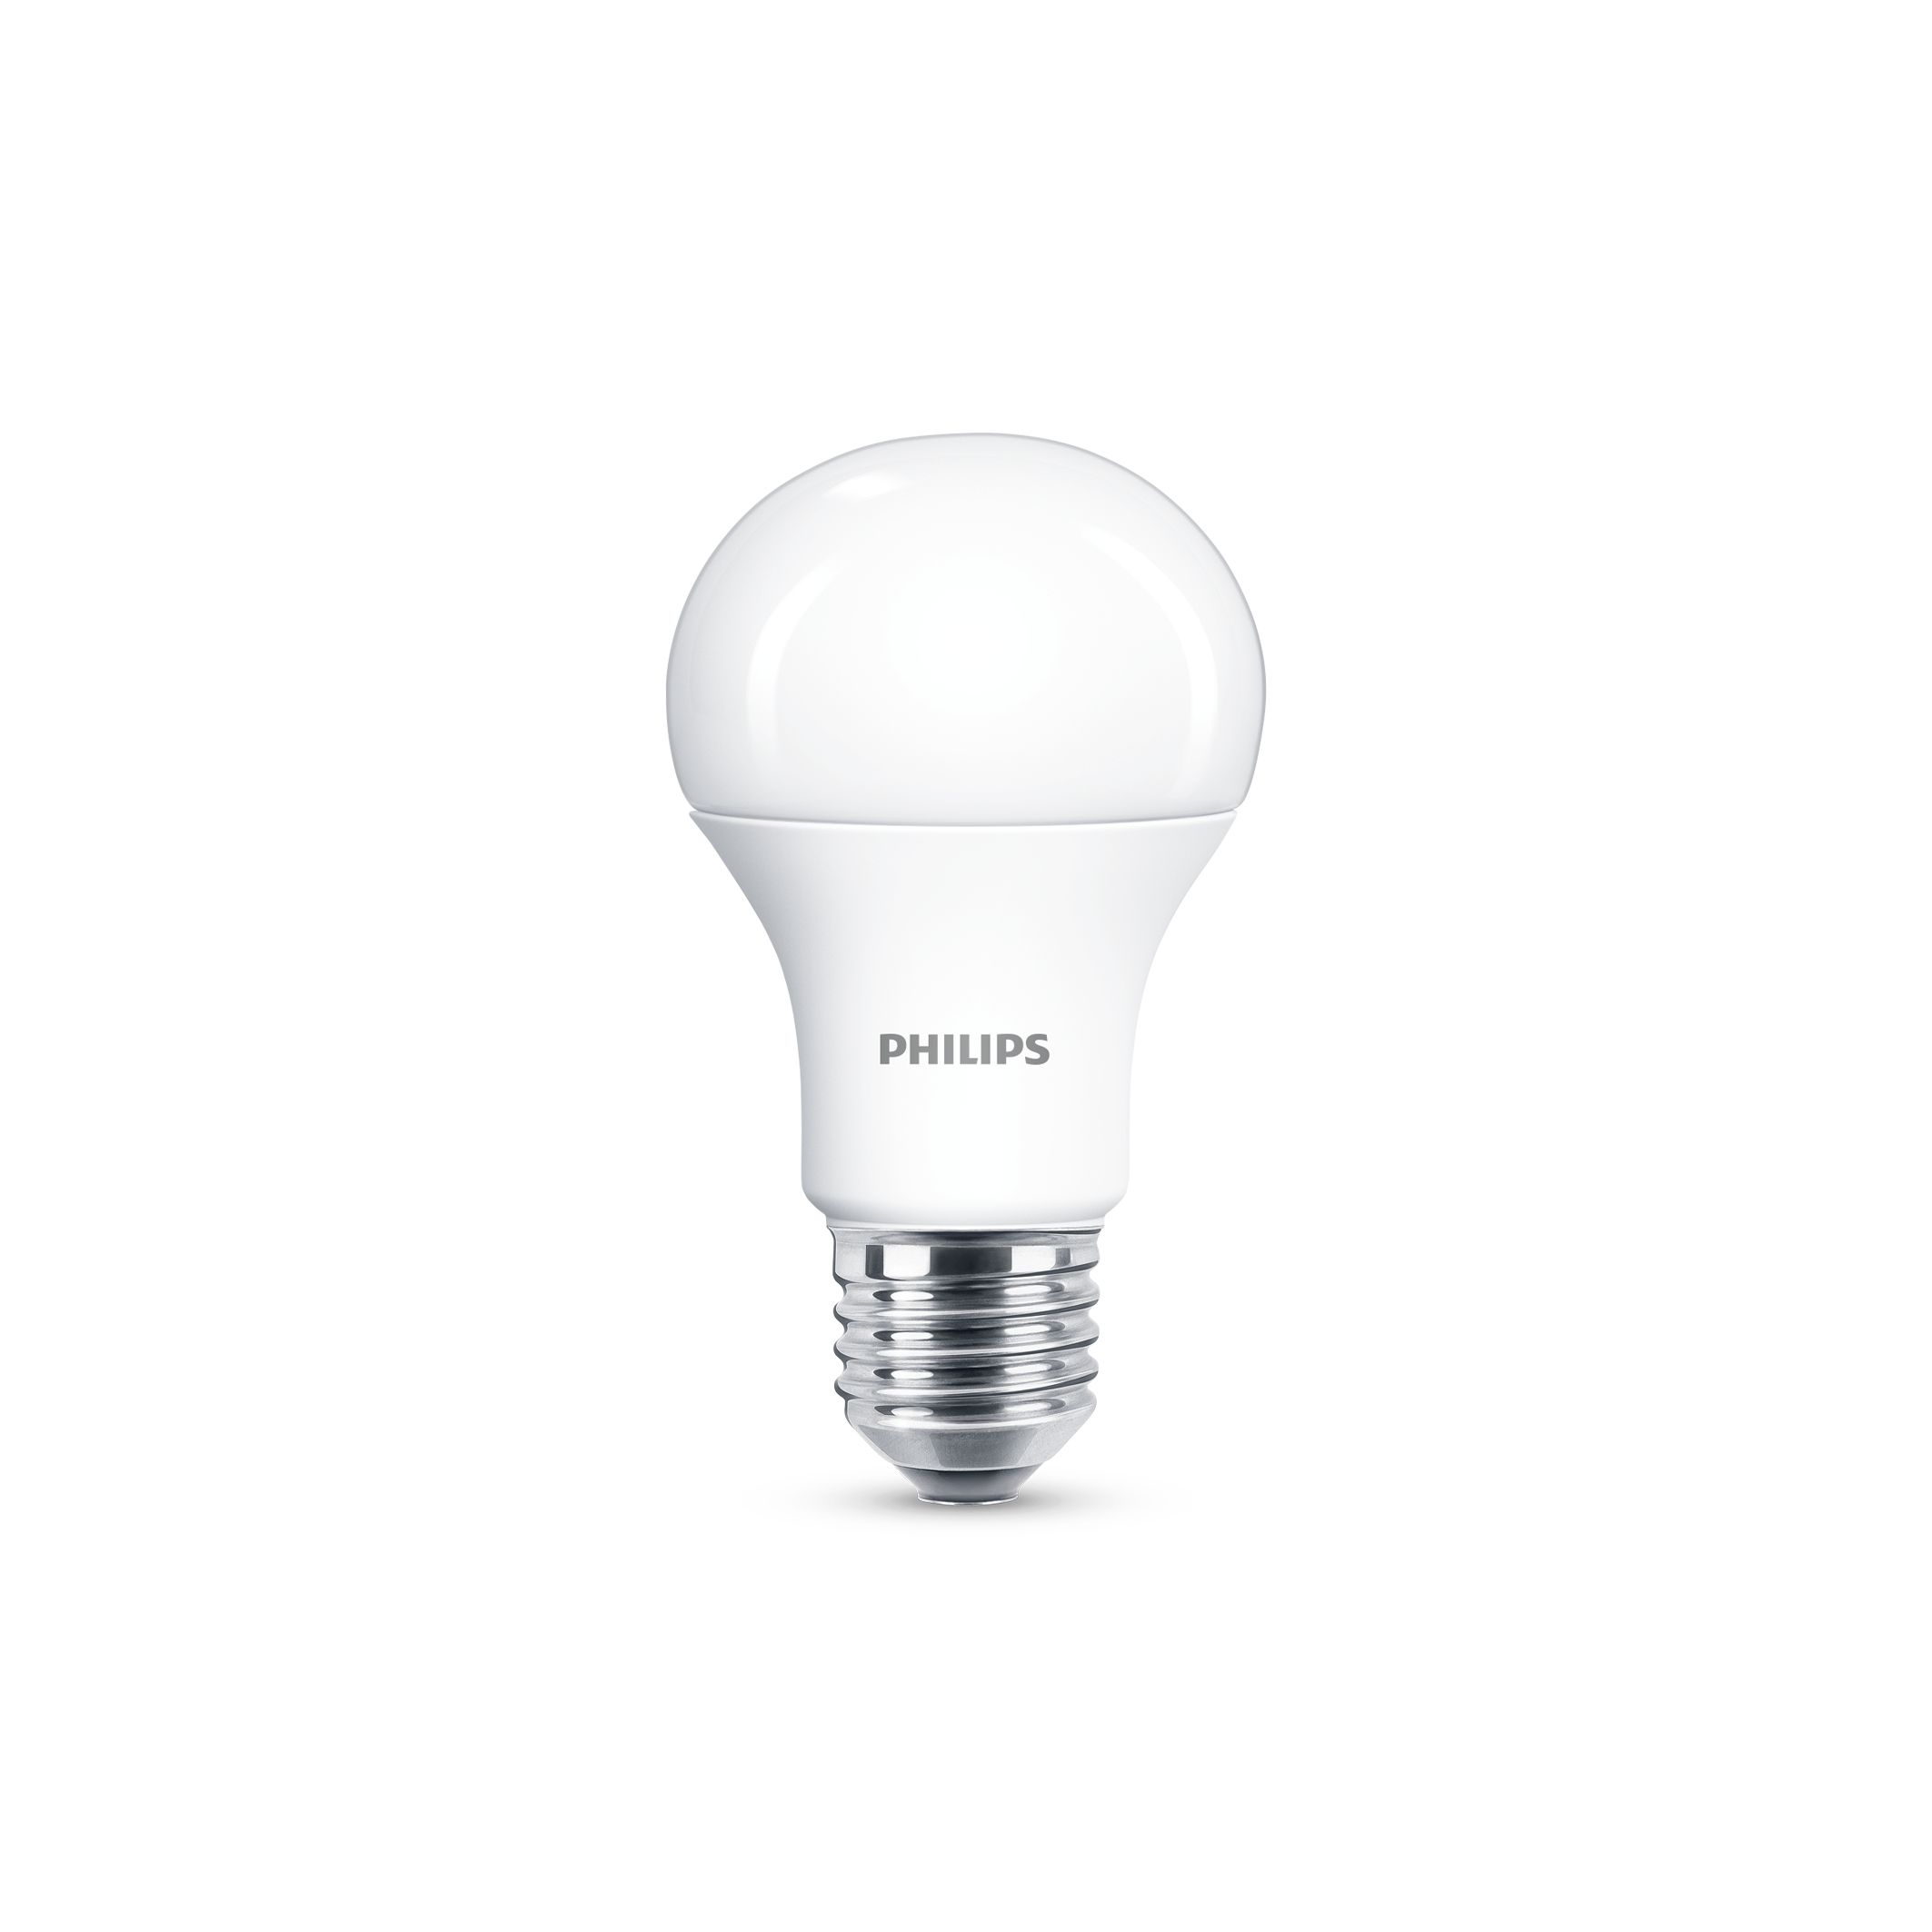 Standard Led Bulbs Philips Lighting